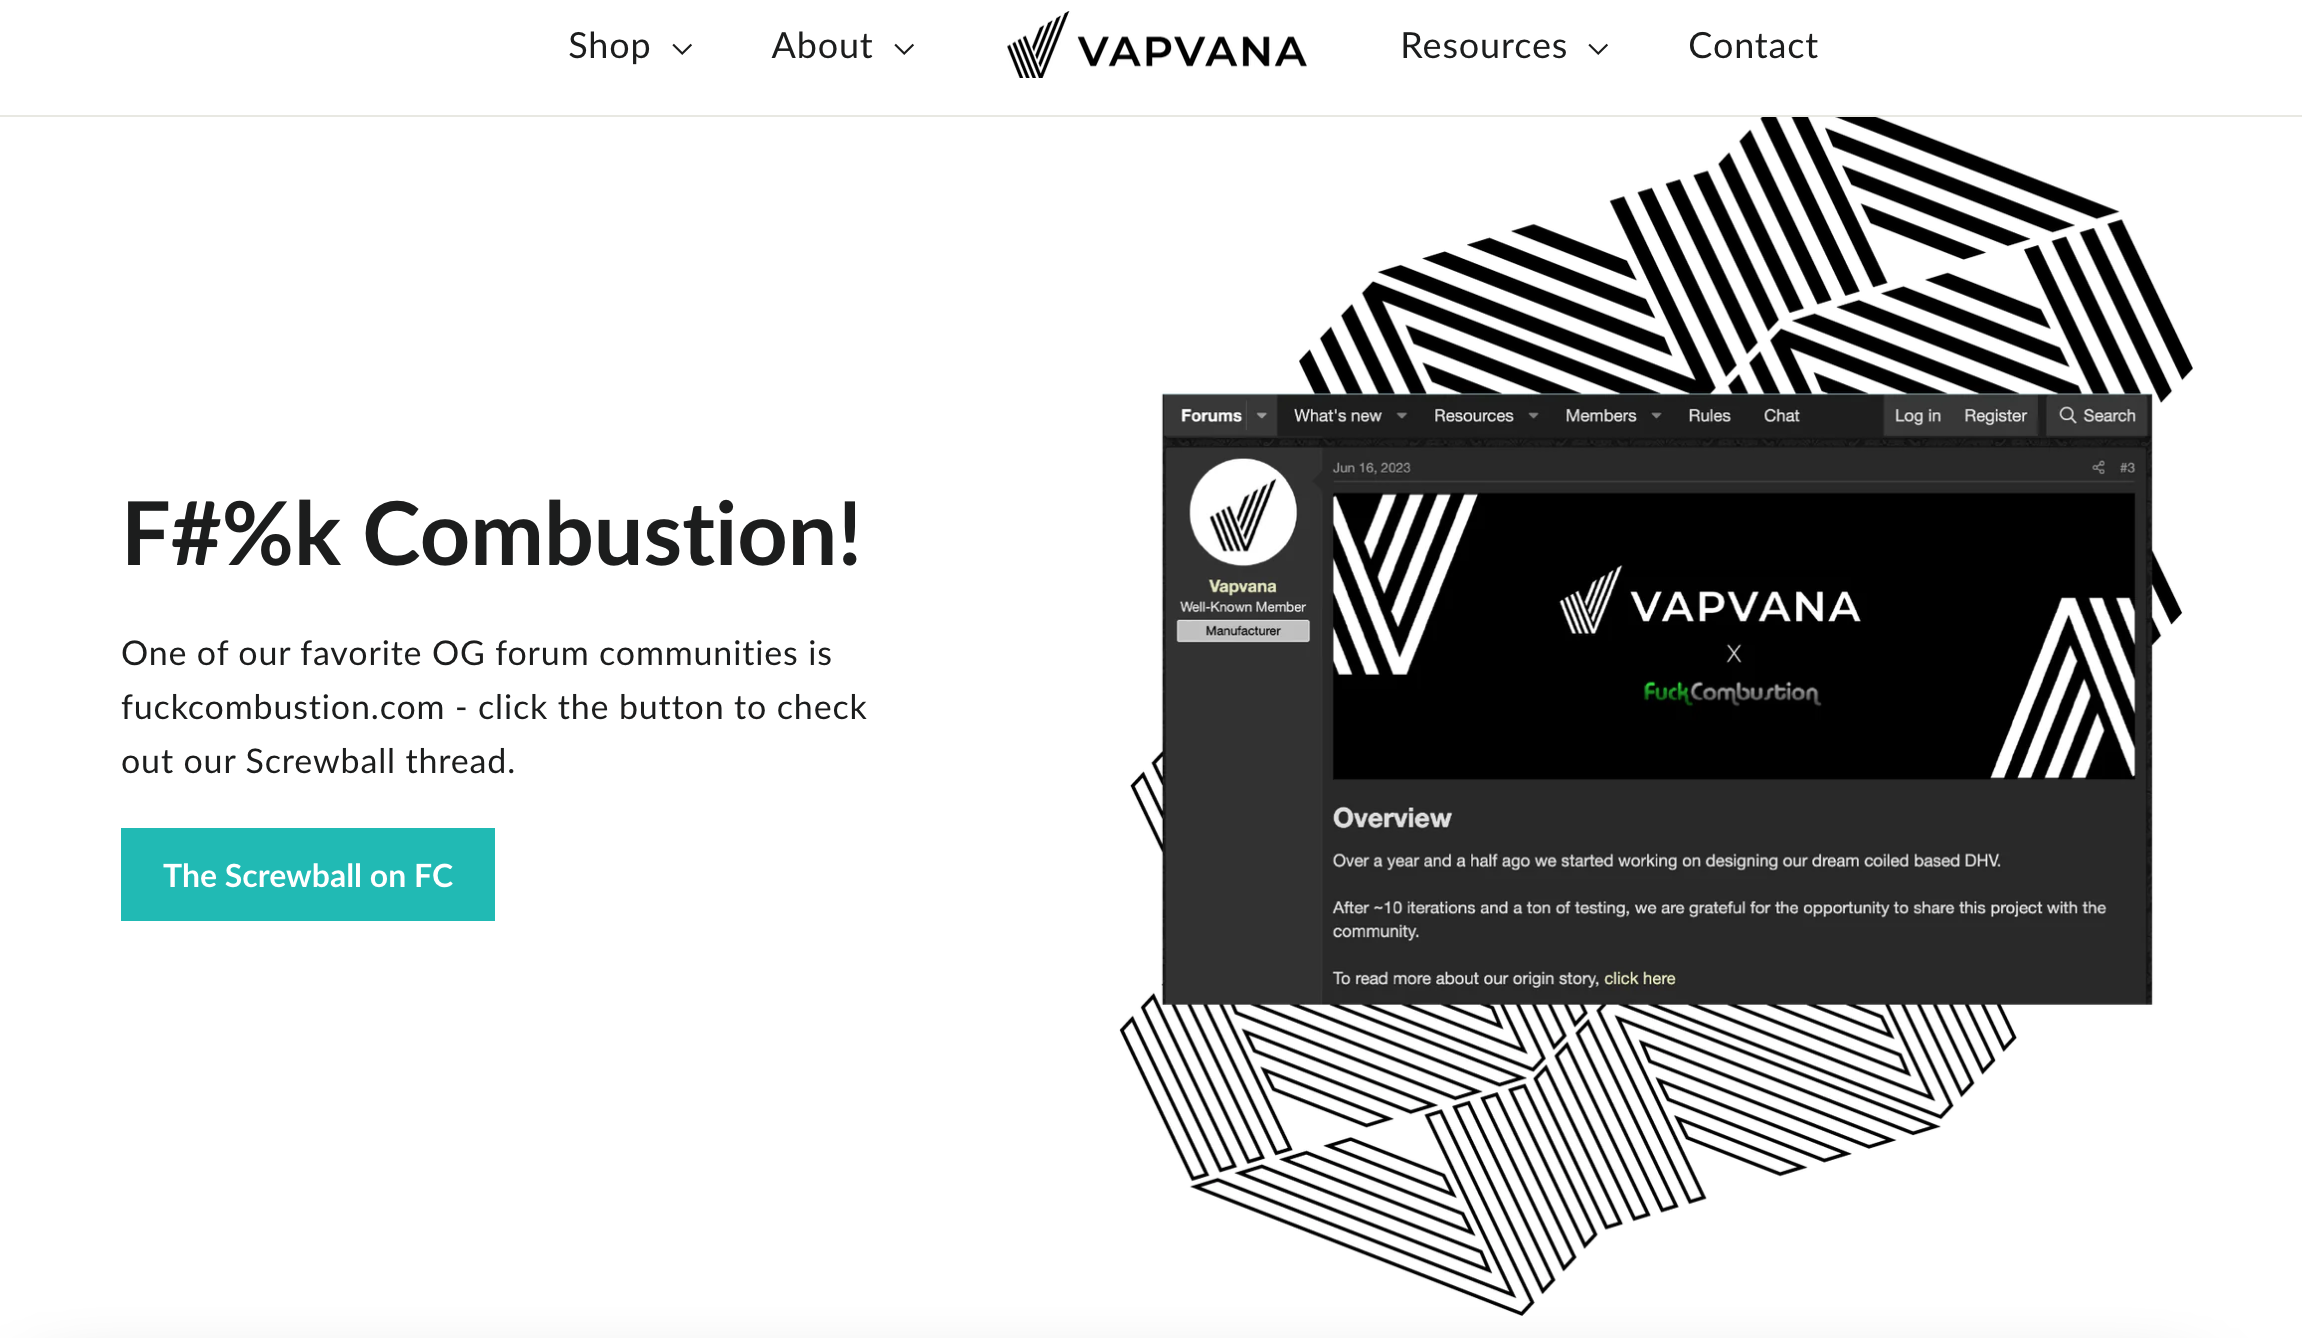 vapvana-website-fc-section.png